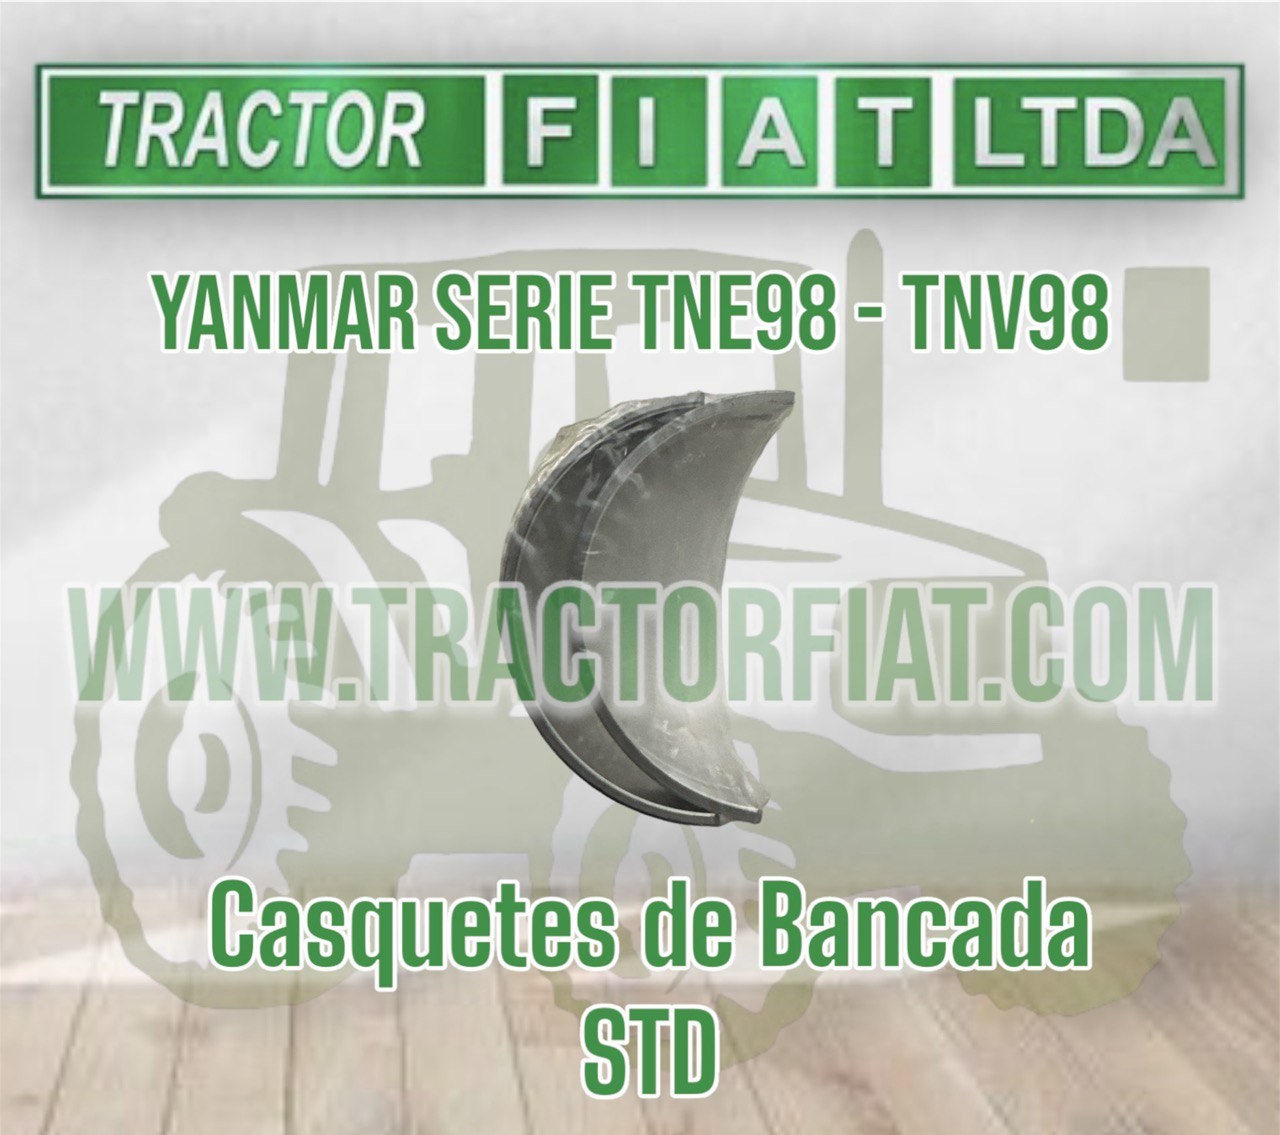 CASQUETES DE BANCADA STD  - MOTOR YANMAR SERIES TNE98/TNV98